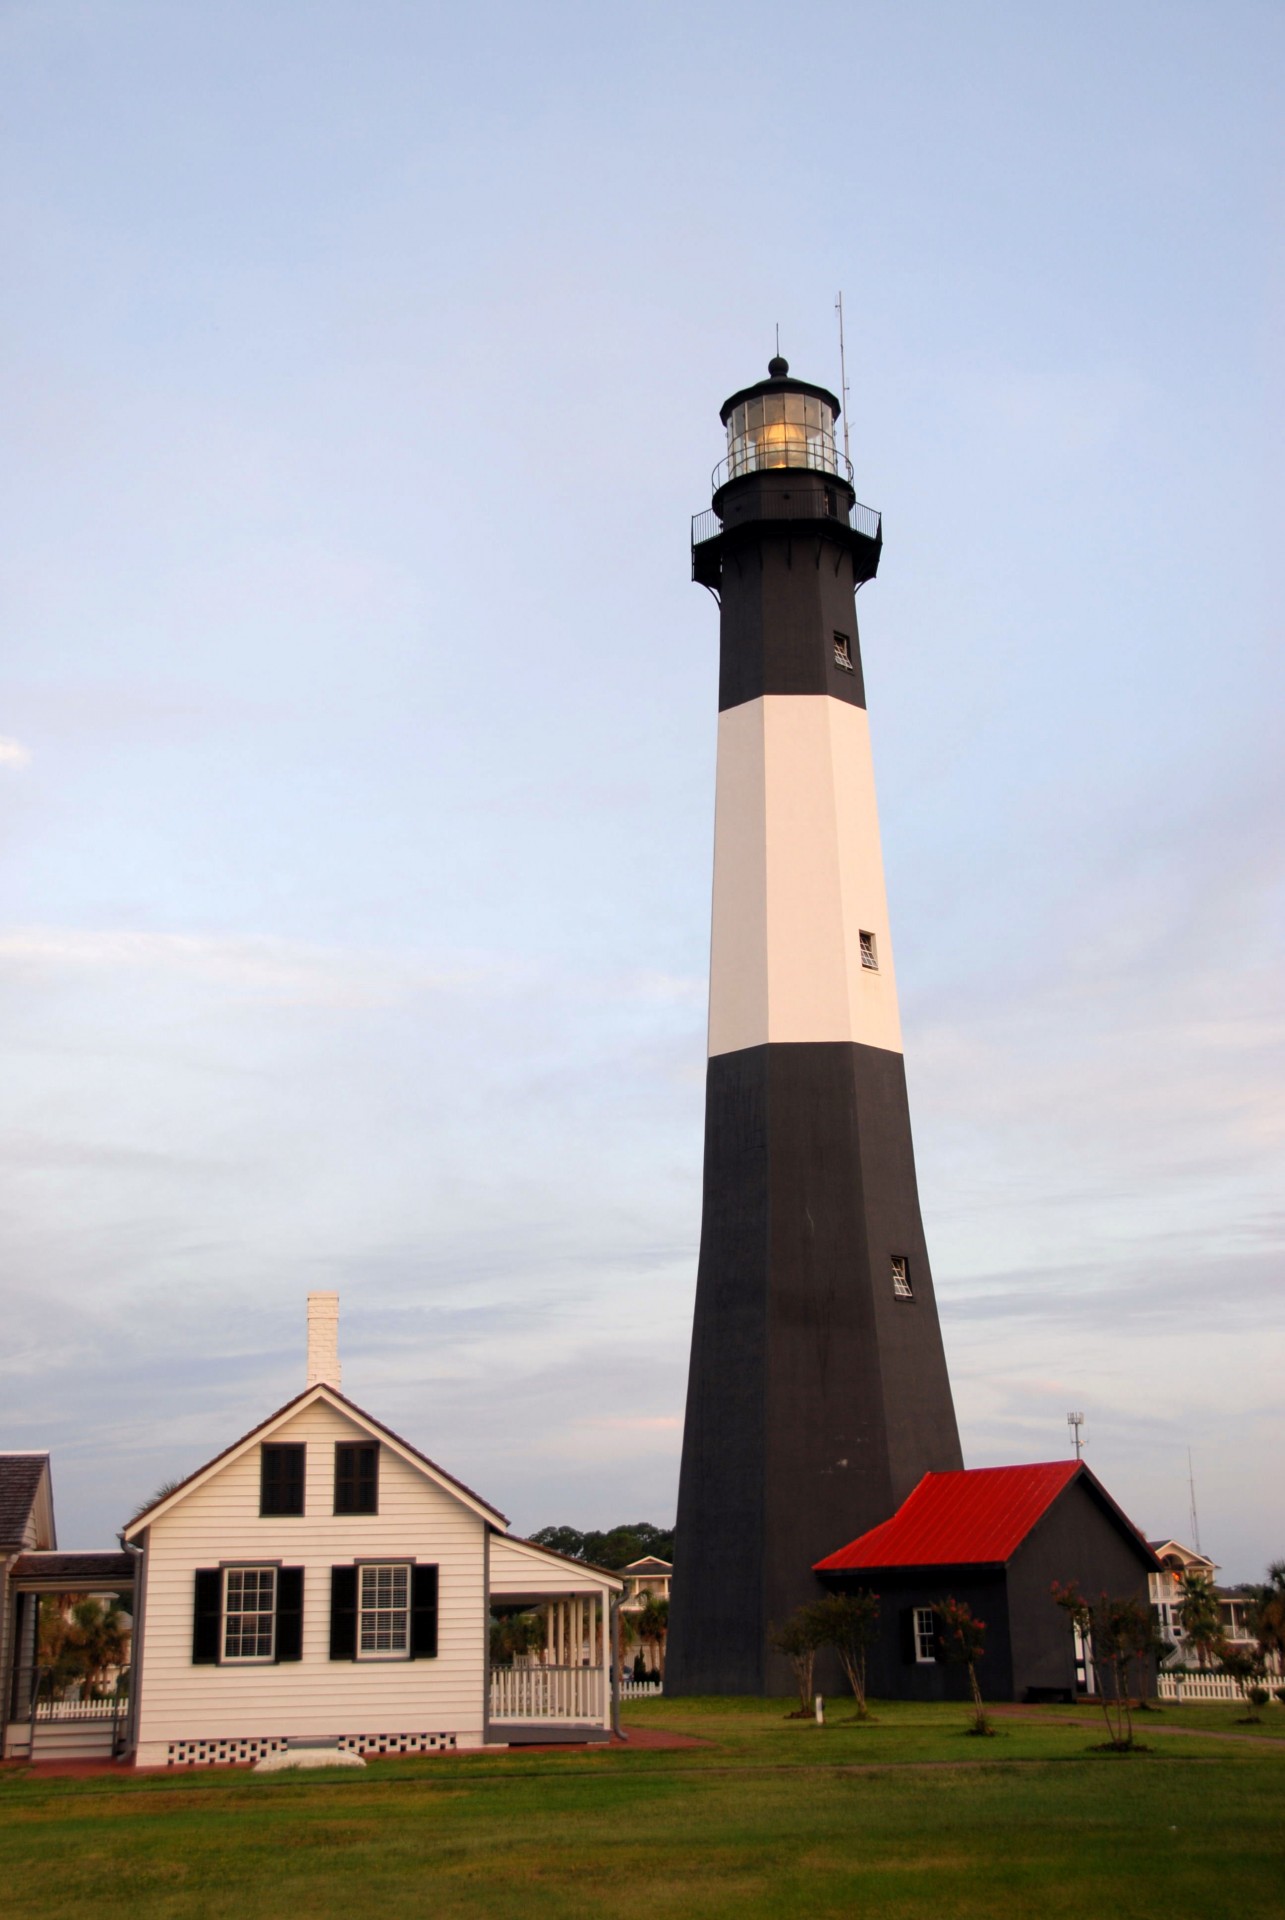 Tybee Island Georgia Lighthouse